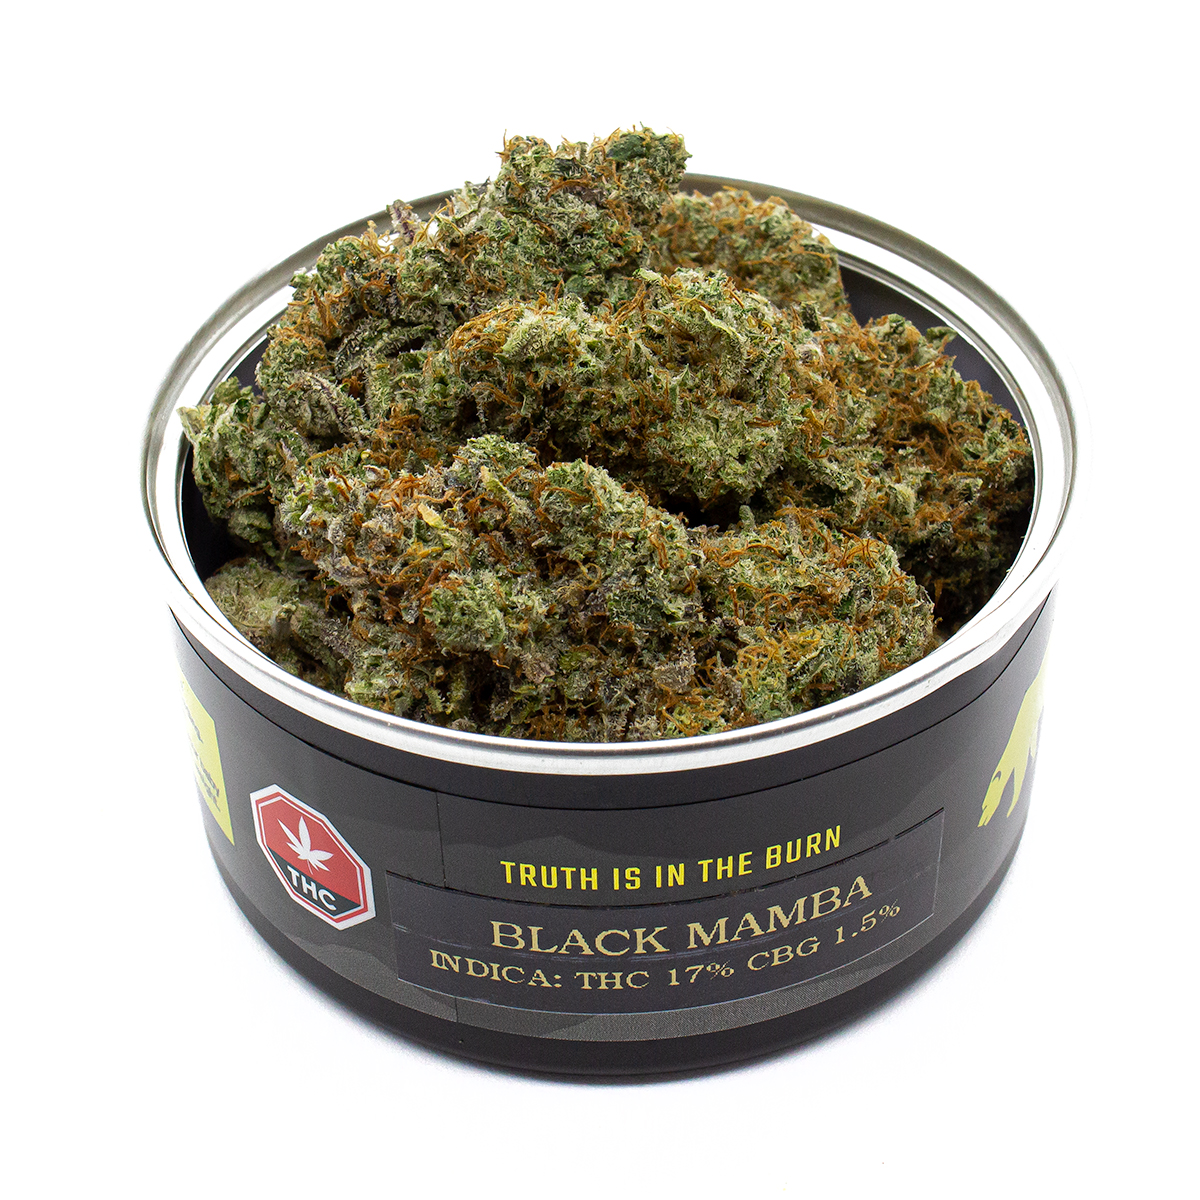 Skookum Black Mamba weed strain